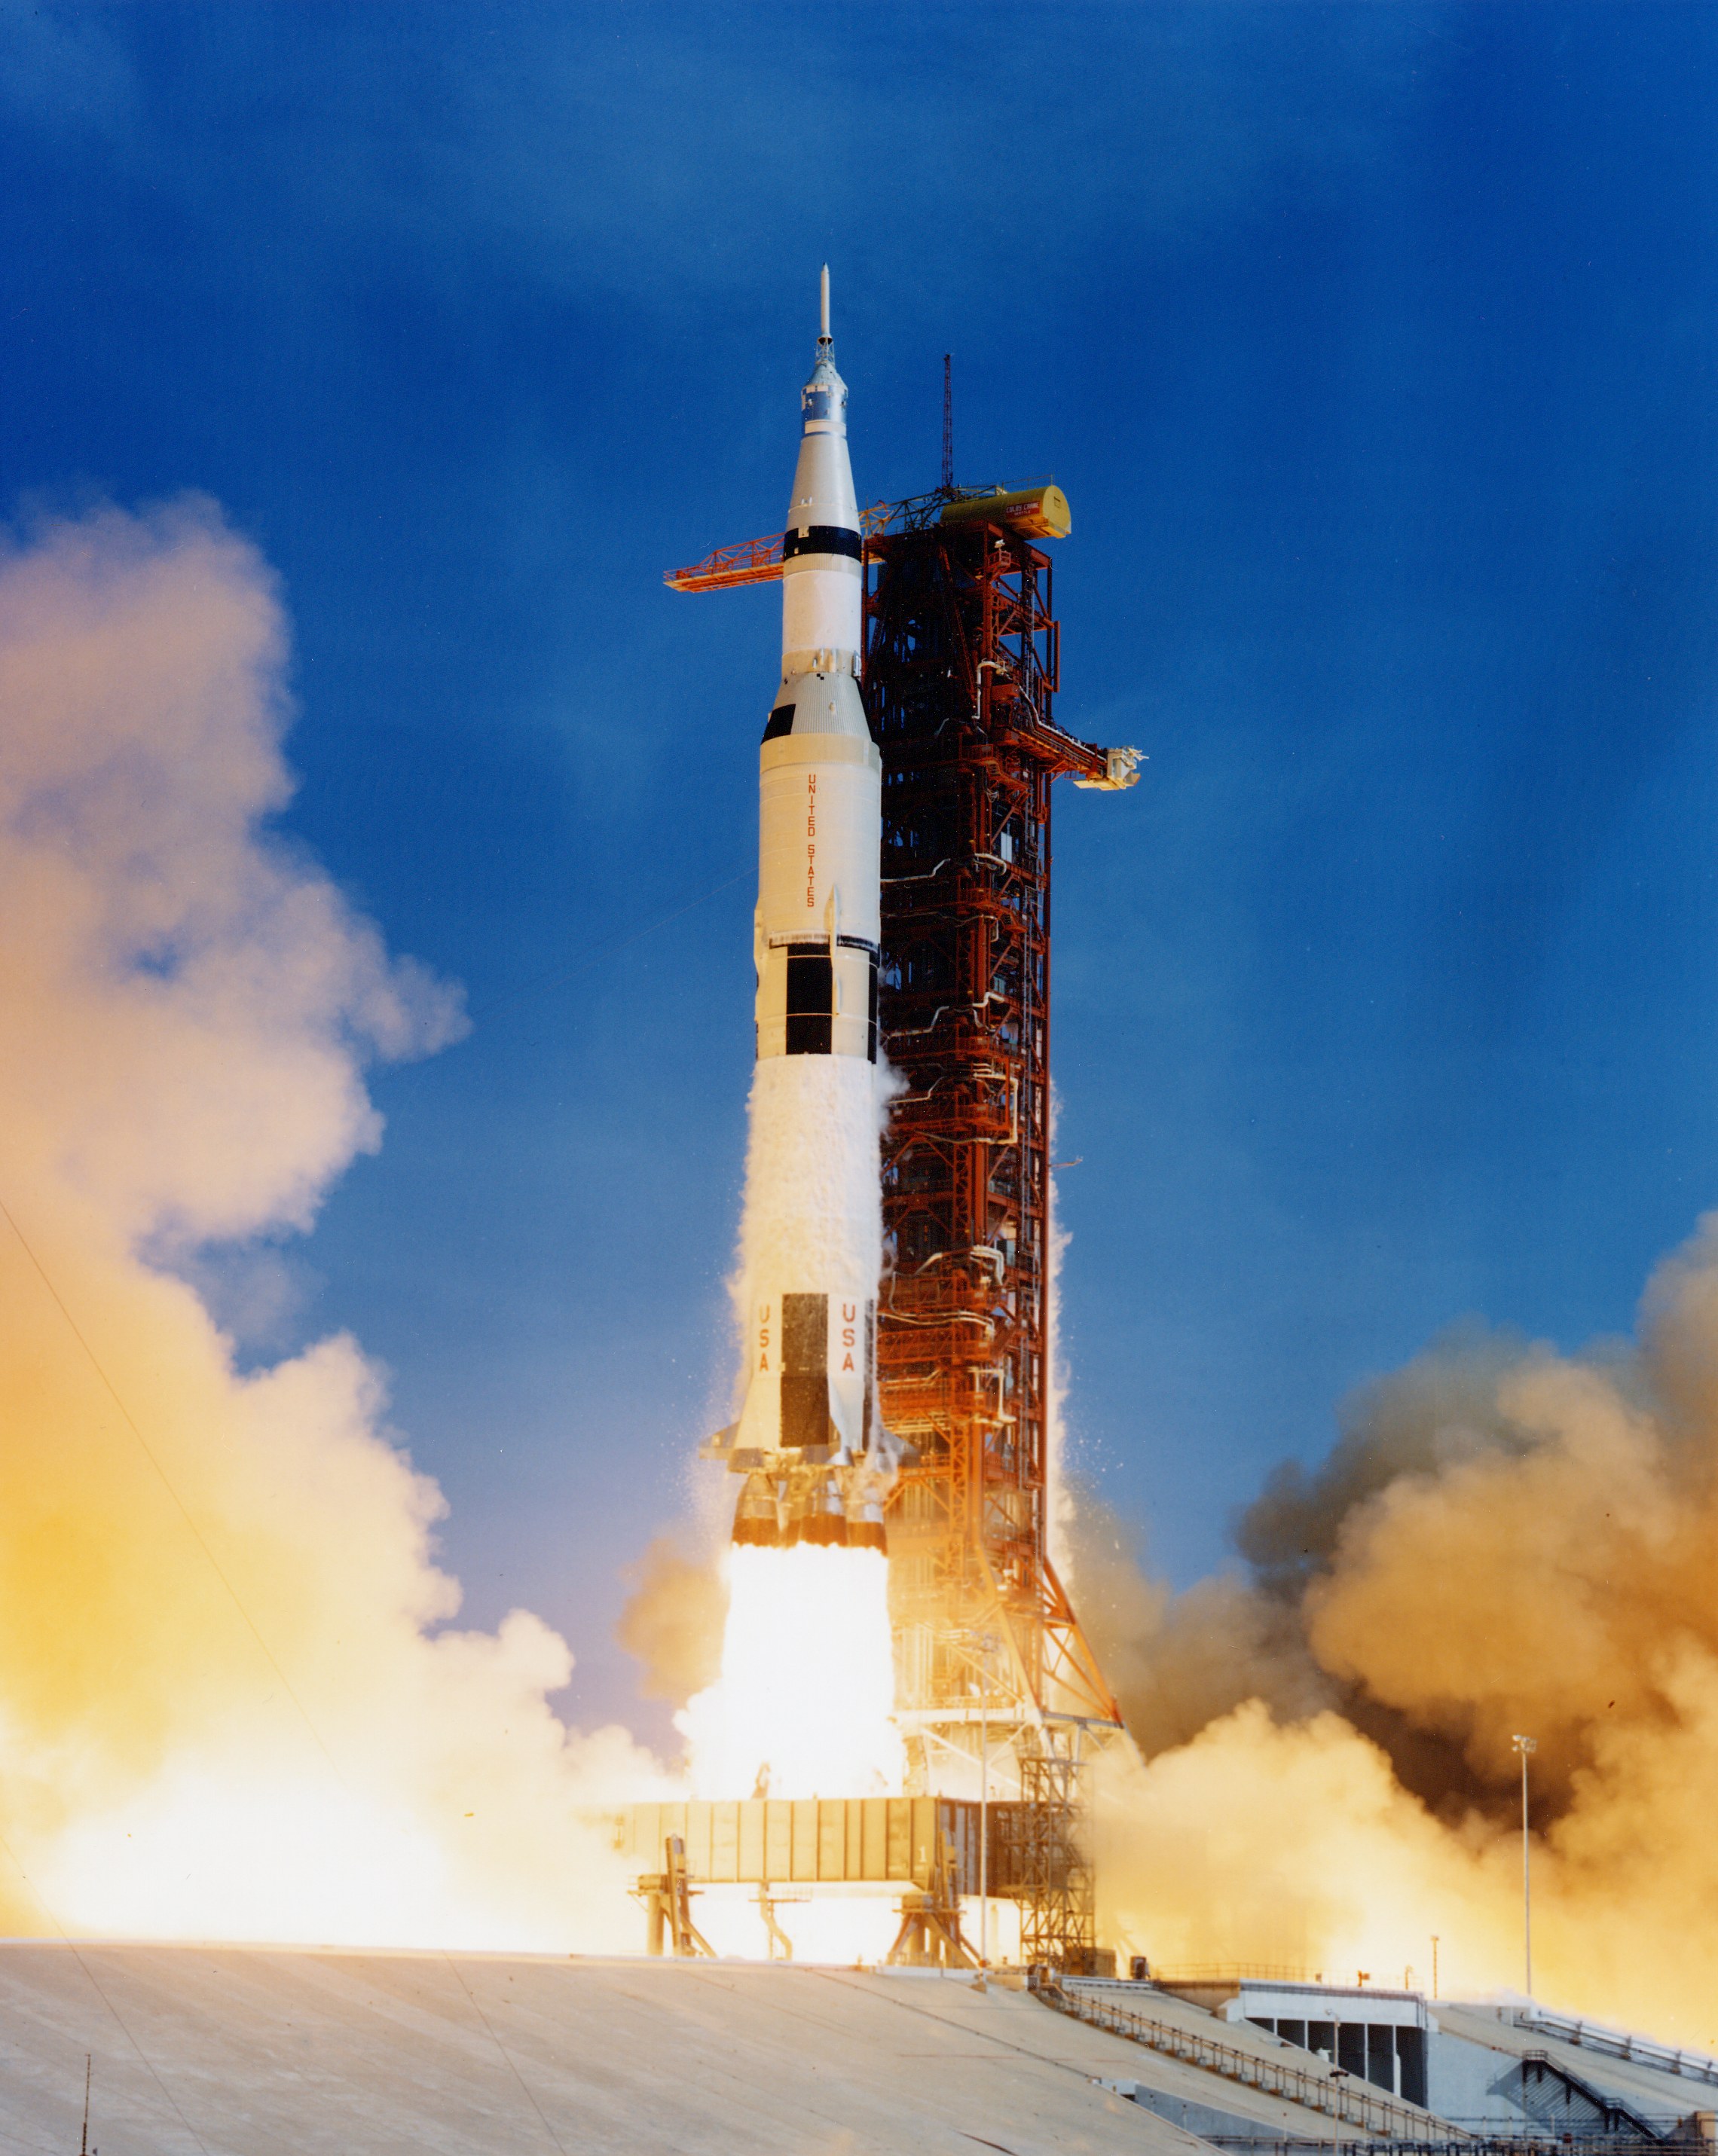 Saturn V Rocket - Apollo 11